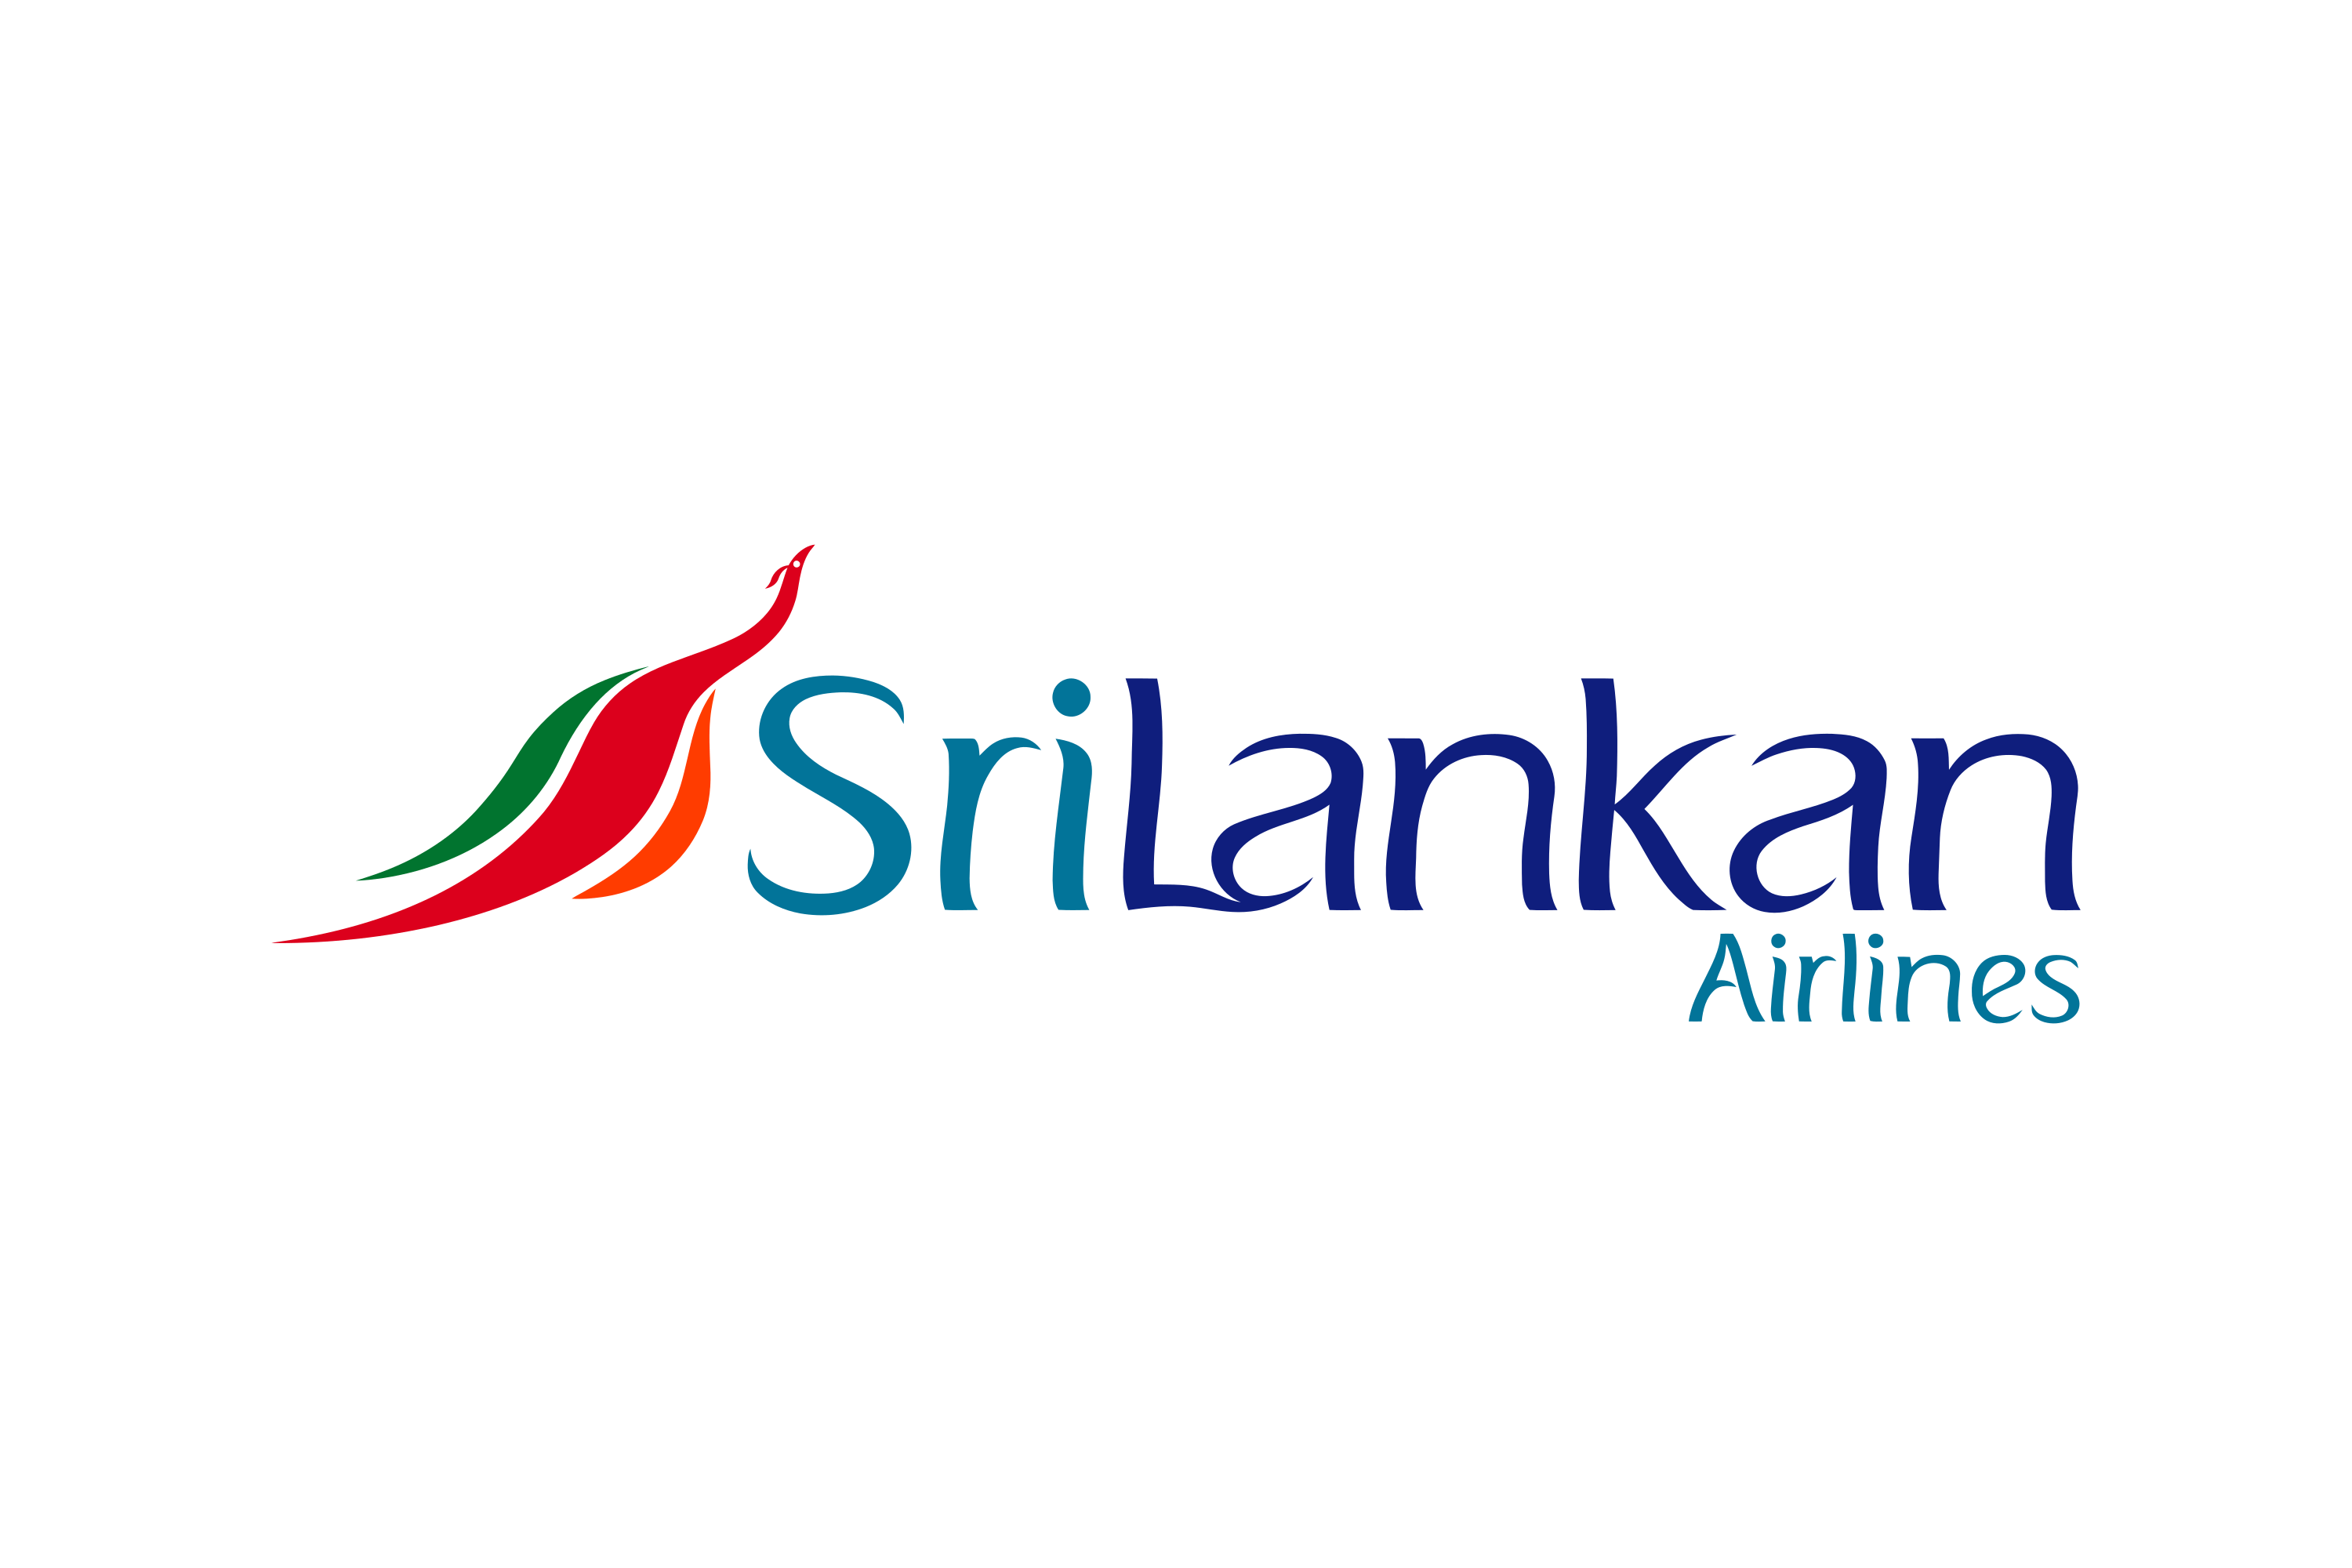 Srilankan Airline Dummy Ticket